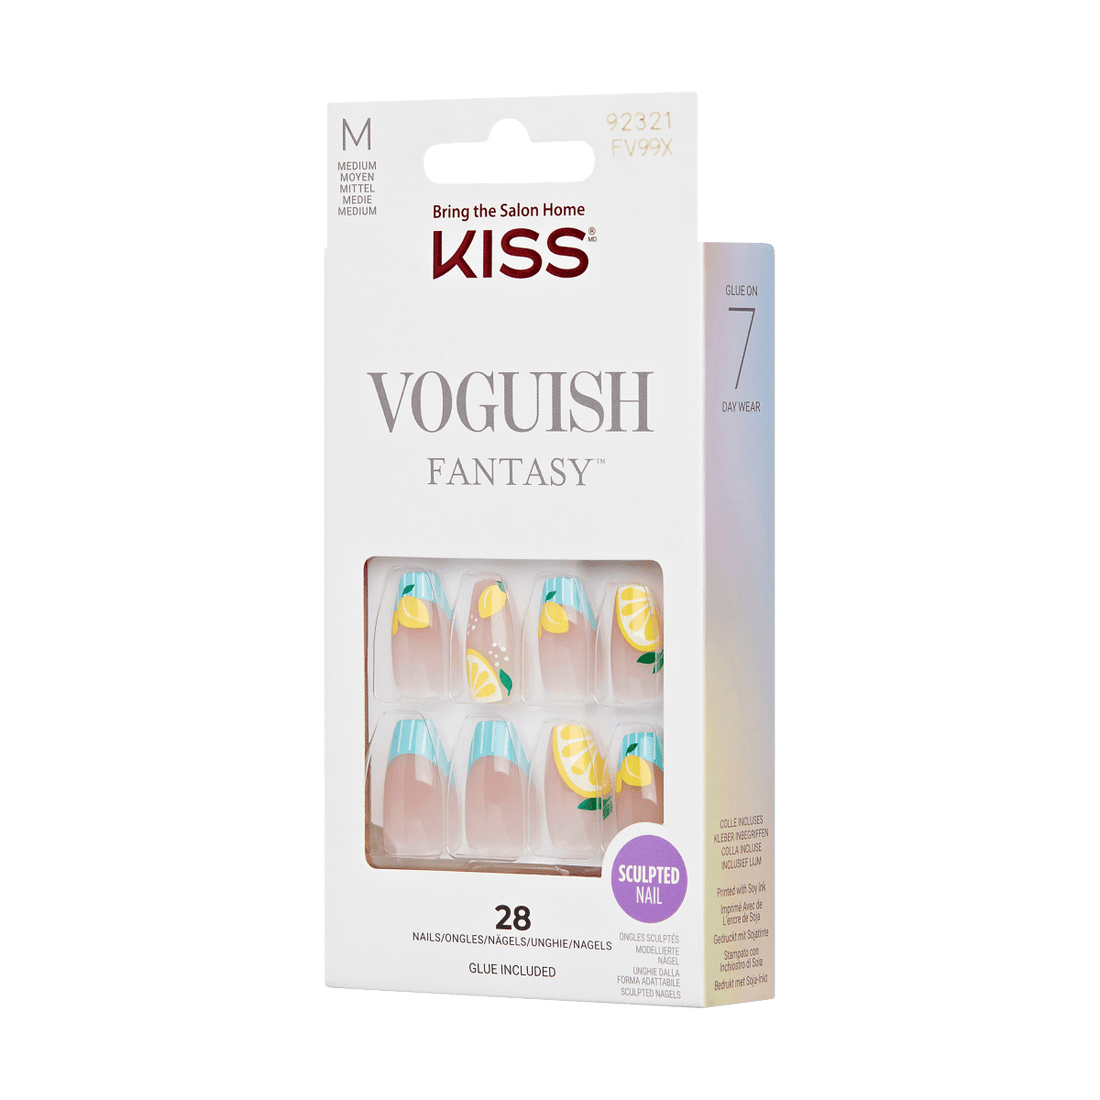 KISS USA: Lashes, Nails, Hair Care Tools, Makeup & Skincare